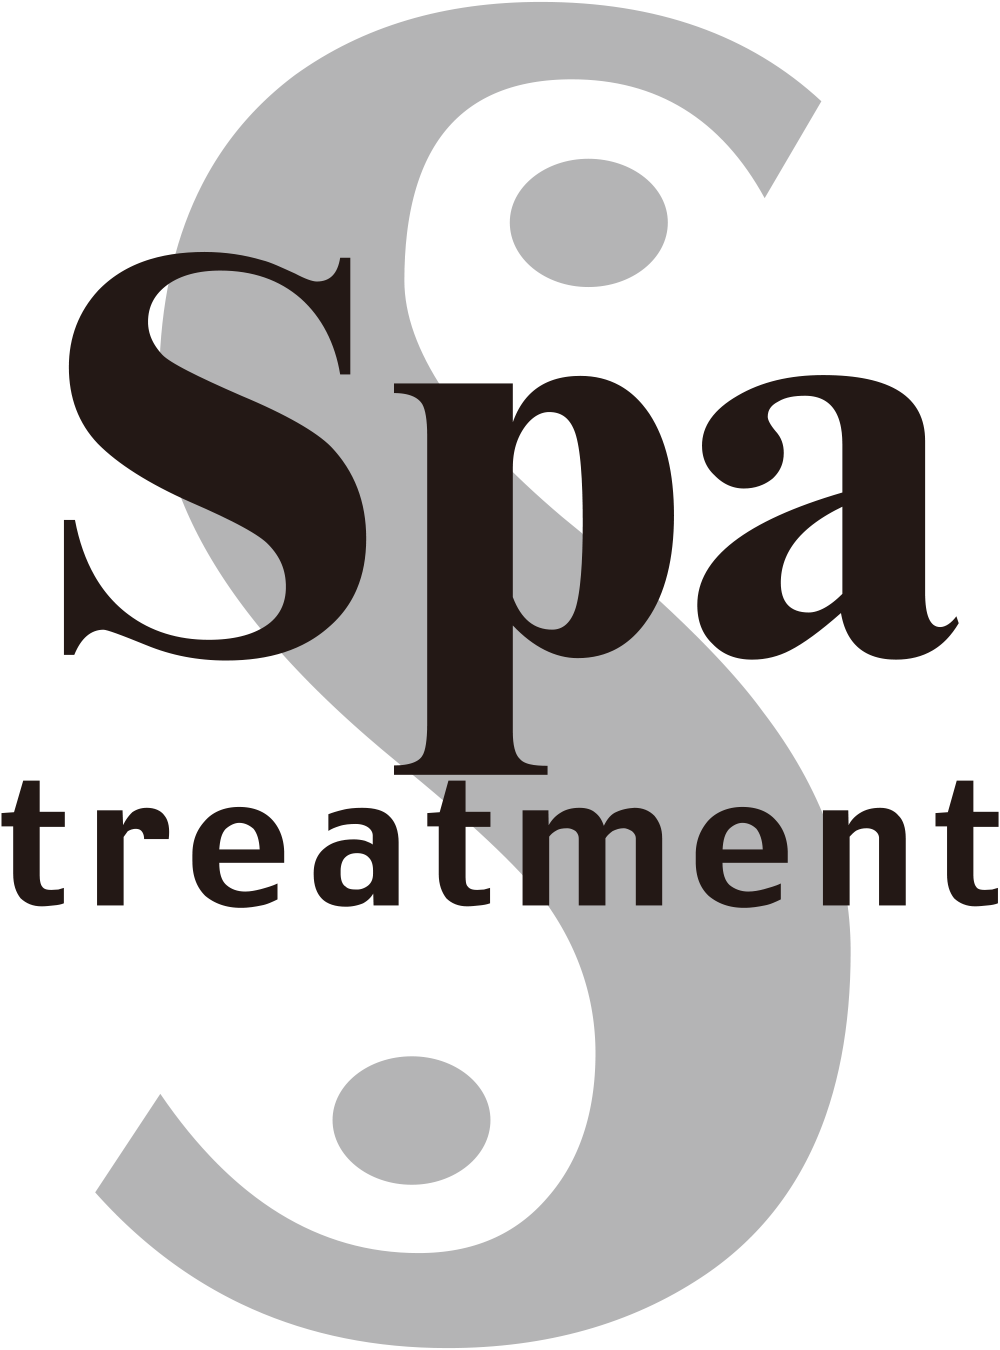 Spa Treatment